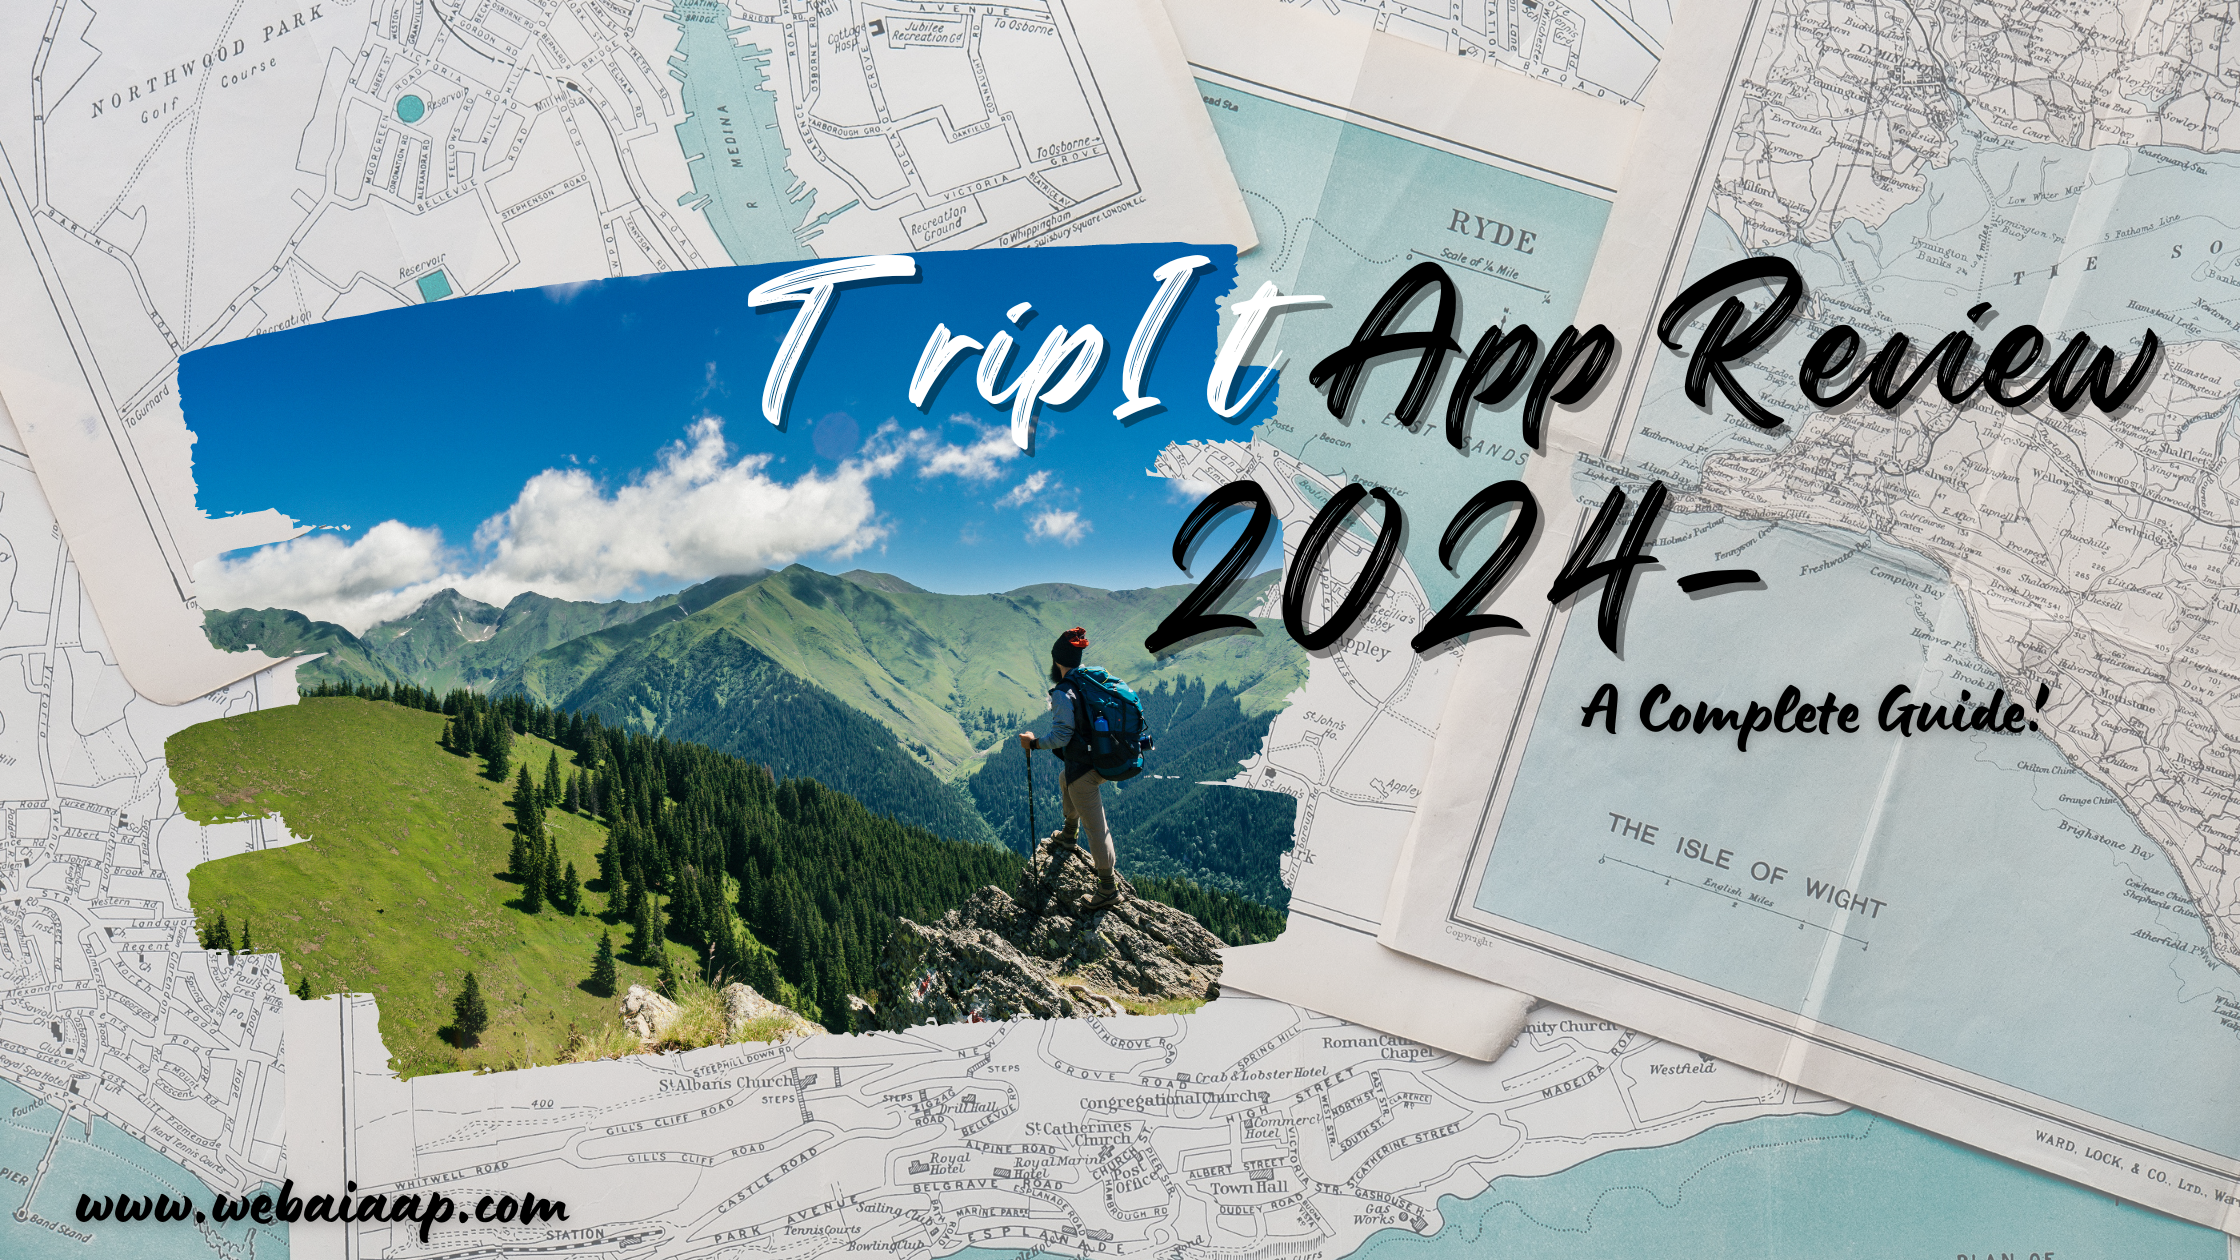 TripIt App Review 2024-A Complete Guide!